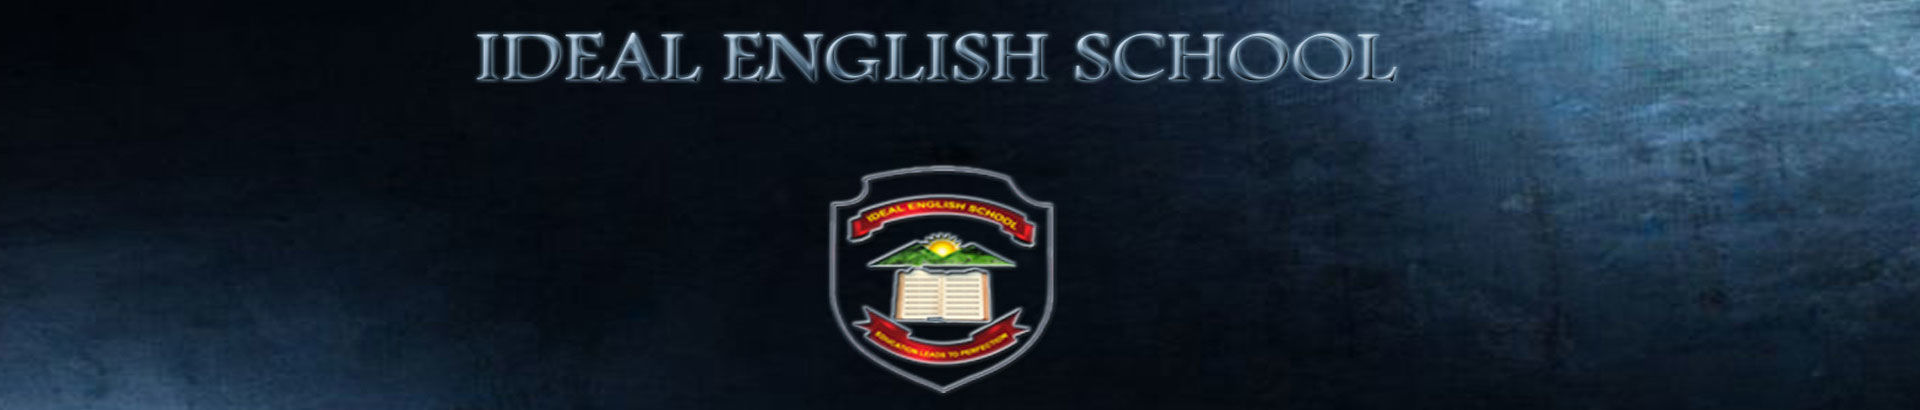 Ideal English School RAK -edcare.ae